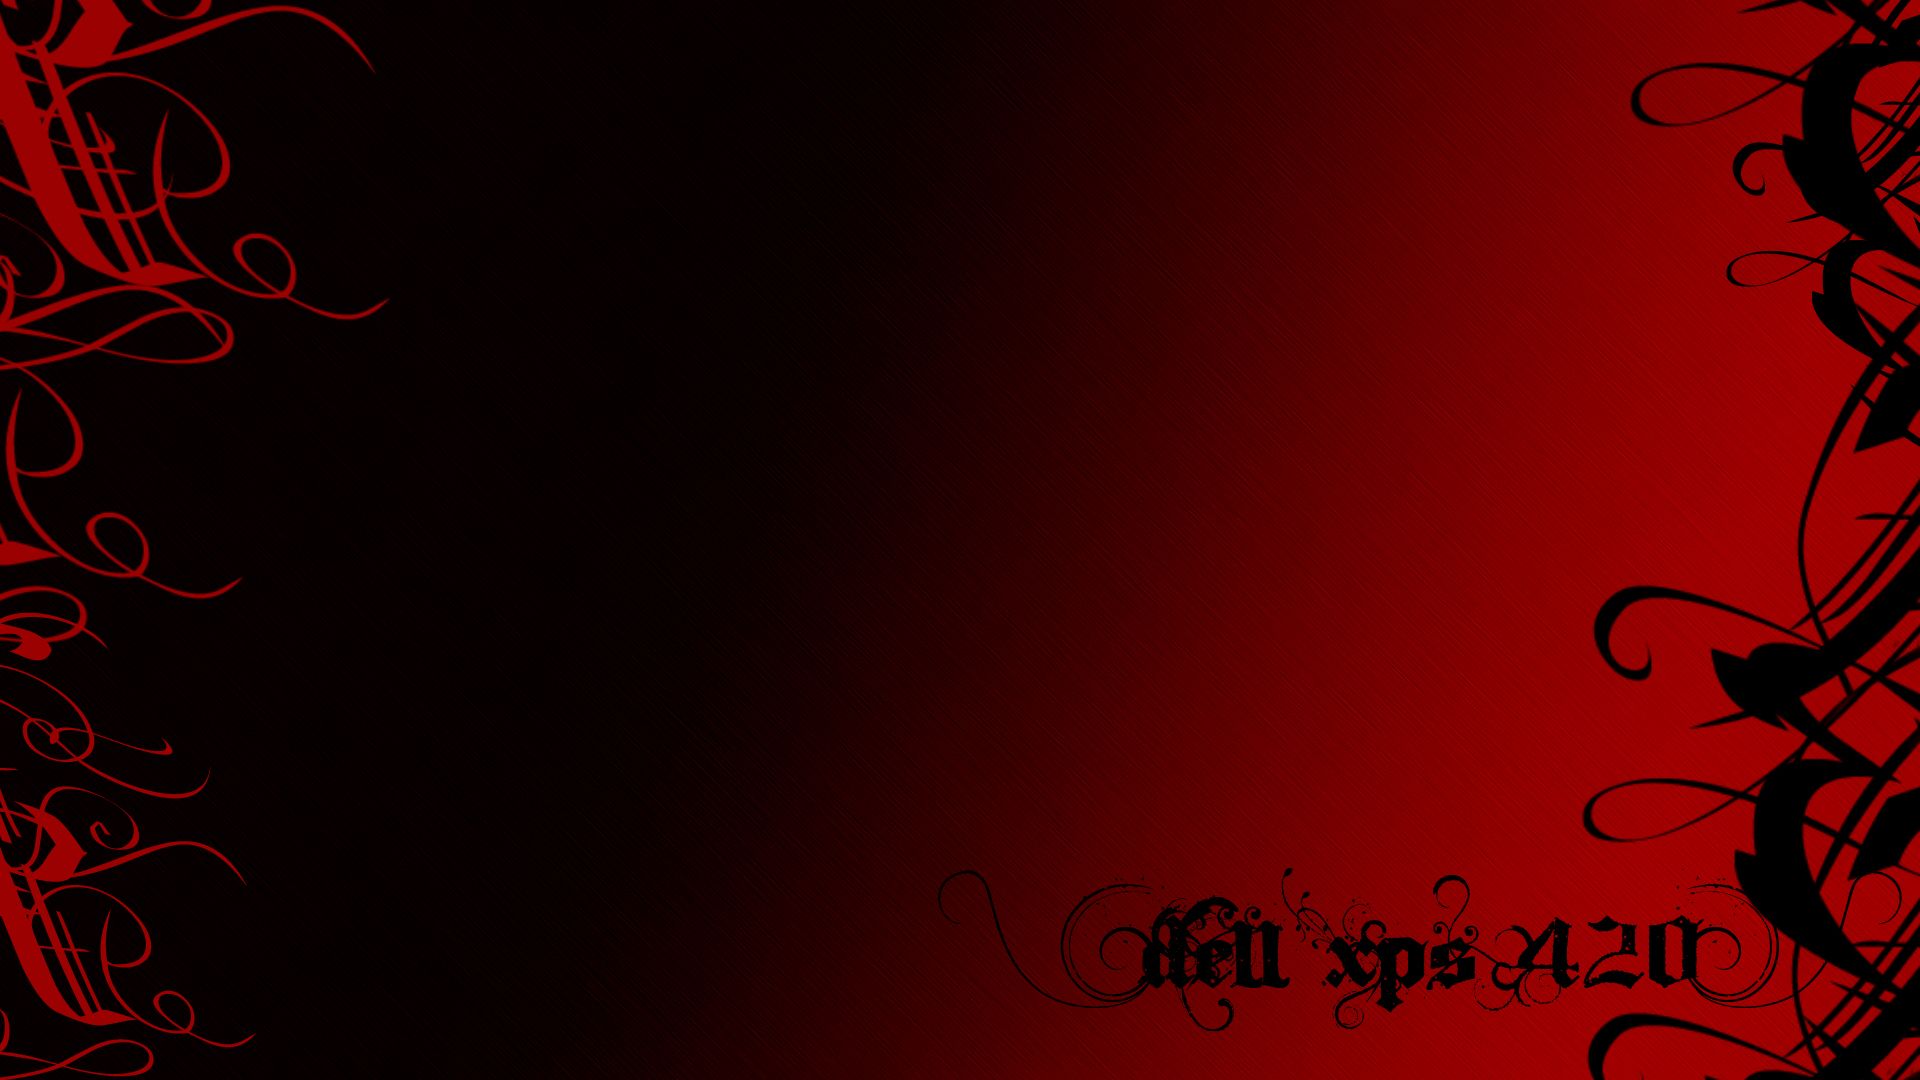 Dell Wallpaper Full Hd - Black And Red Dell - HD Wallpaper 